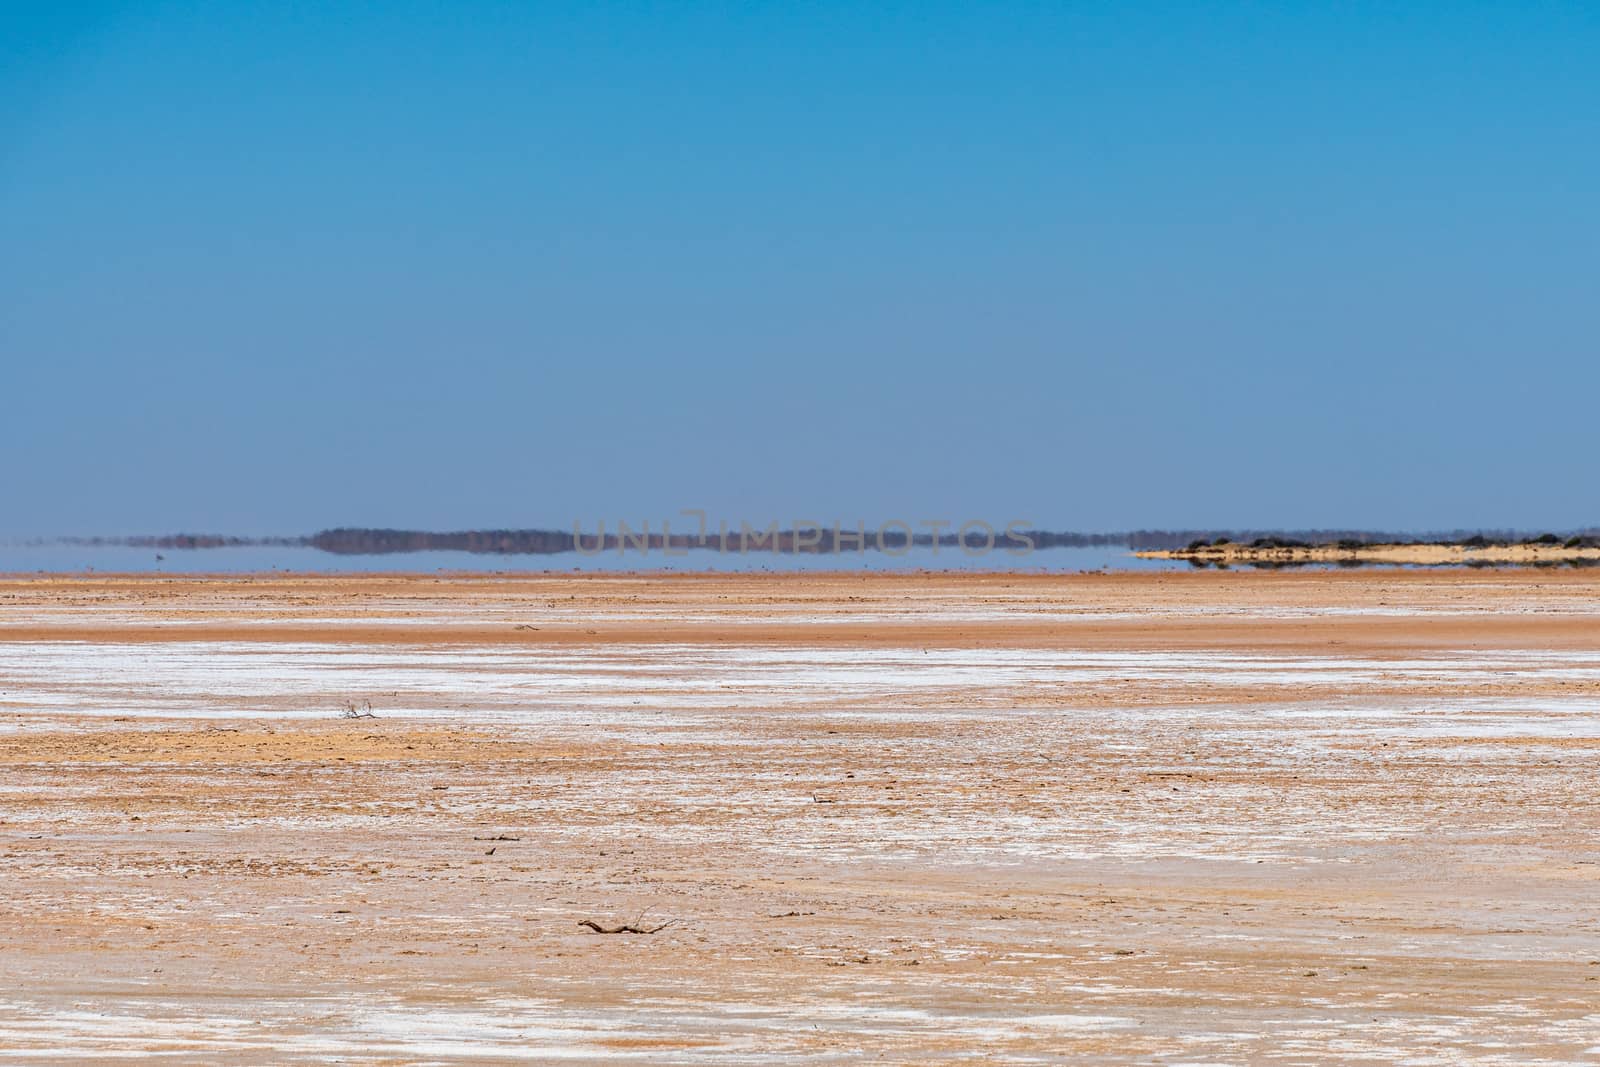 Lake Maclead dry lake in Western Australia mirage at horizon by MXW_Stock